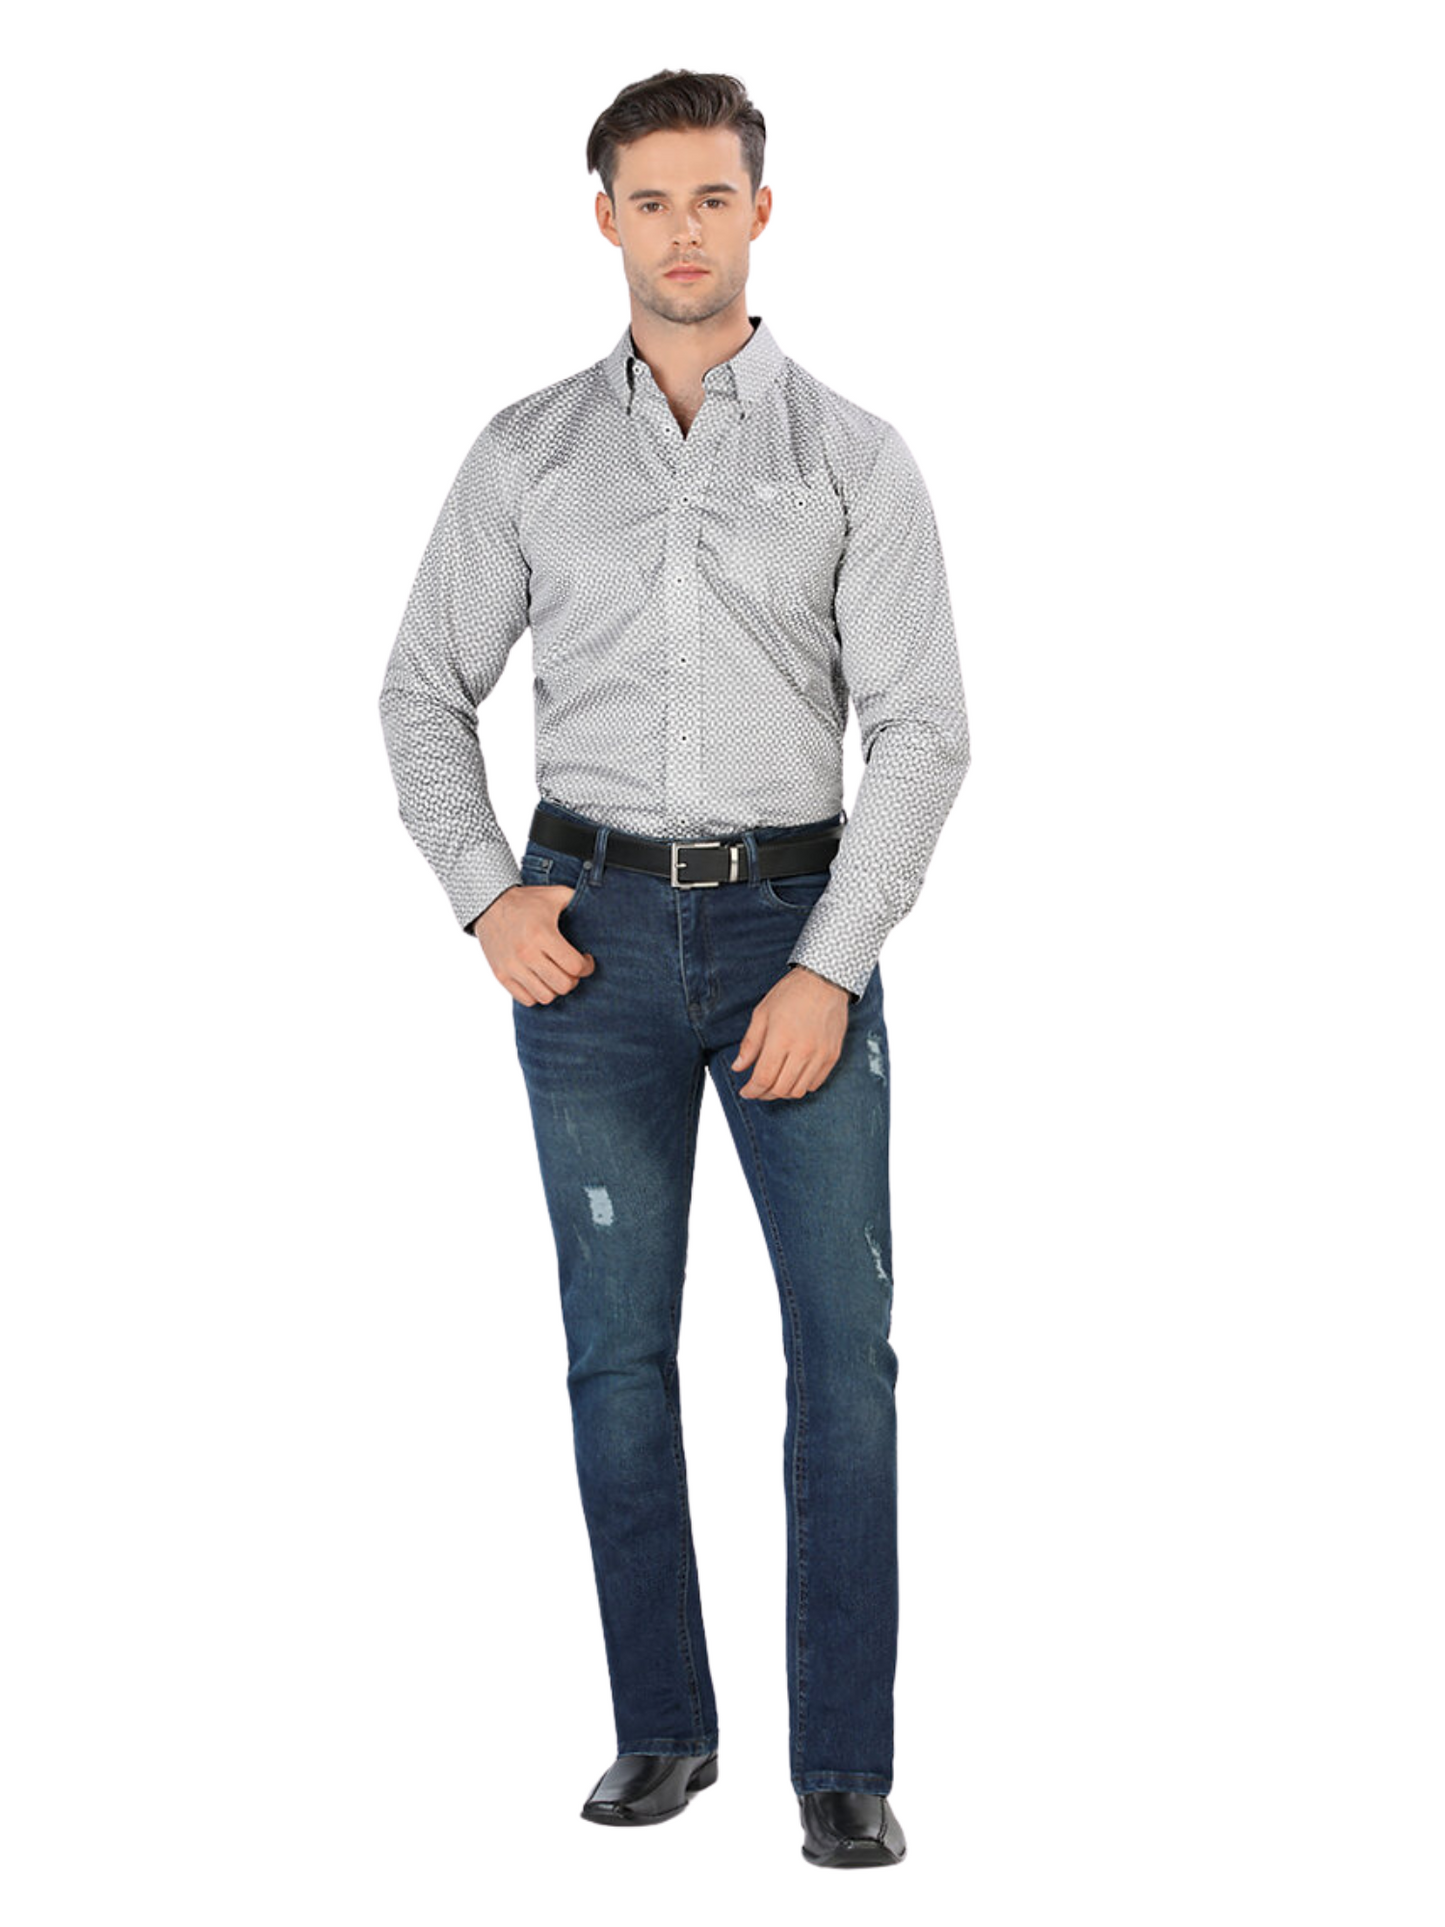 Stretch Denim Jeans for Men 'Montero' - ID: 2306 Denim Jeans Montero Medium Blue